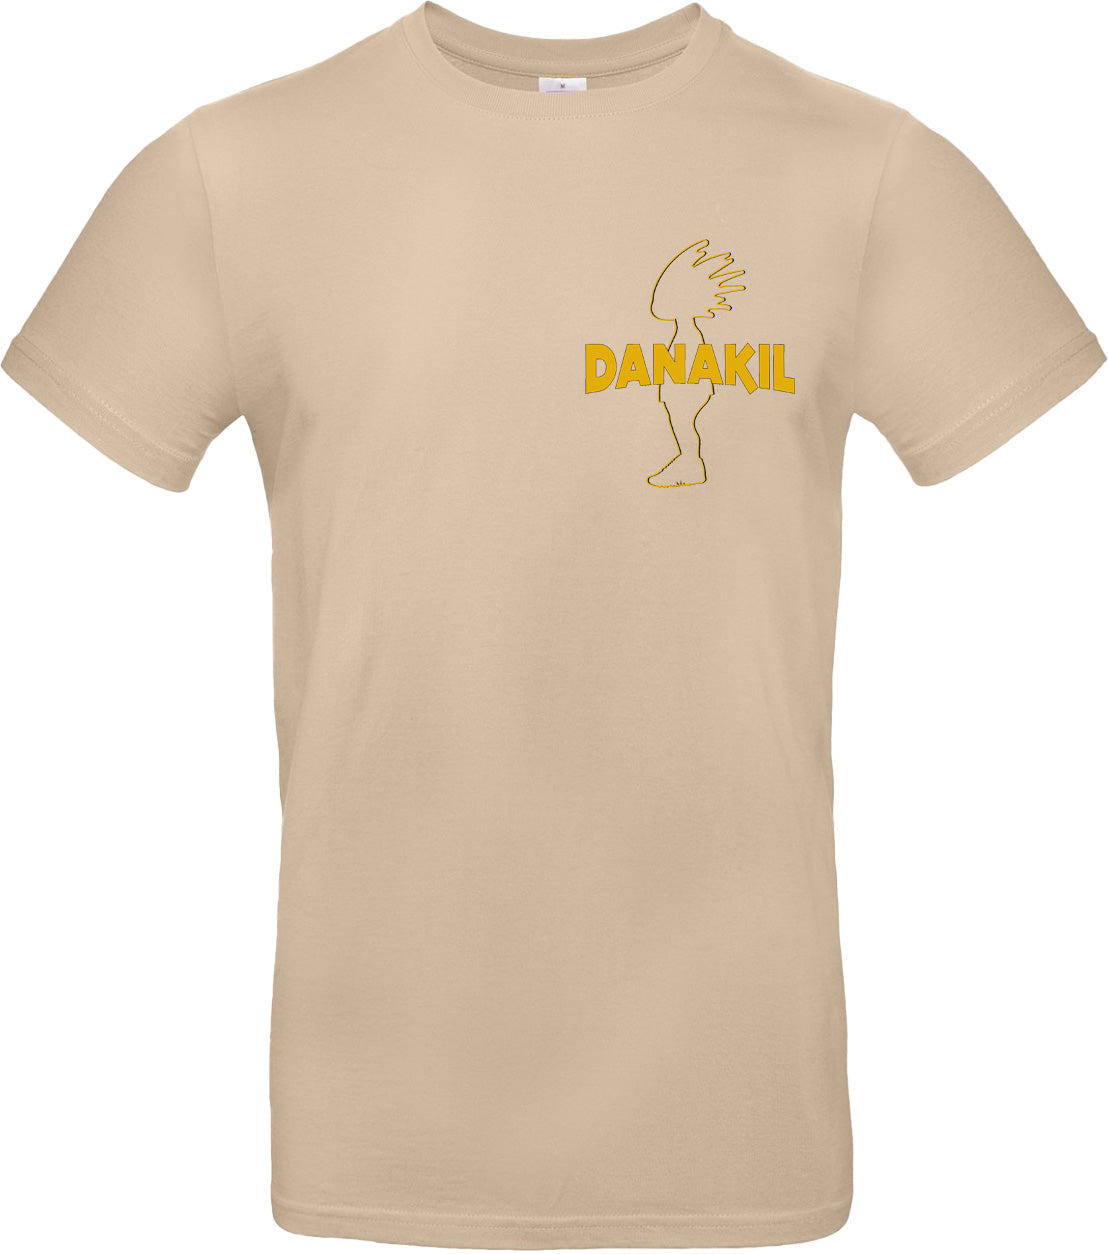 Danakil - T-Shirt Rasta "Marley" couleur beige